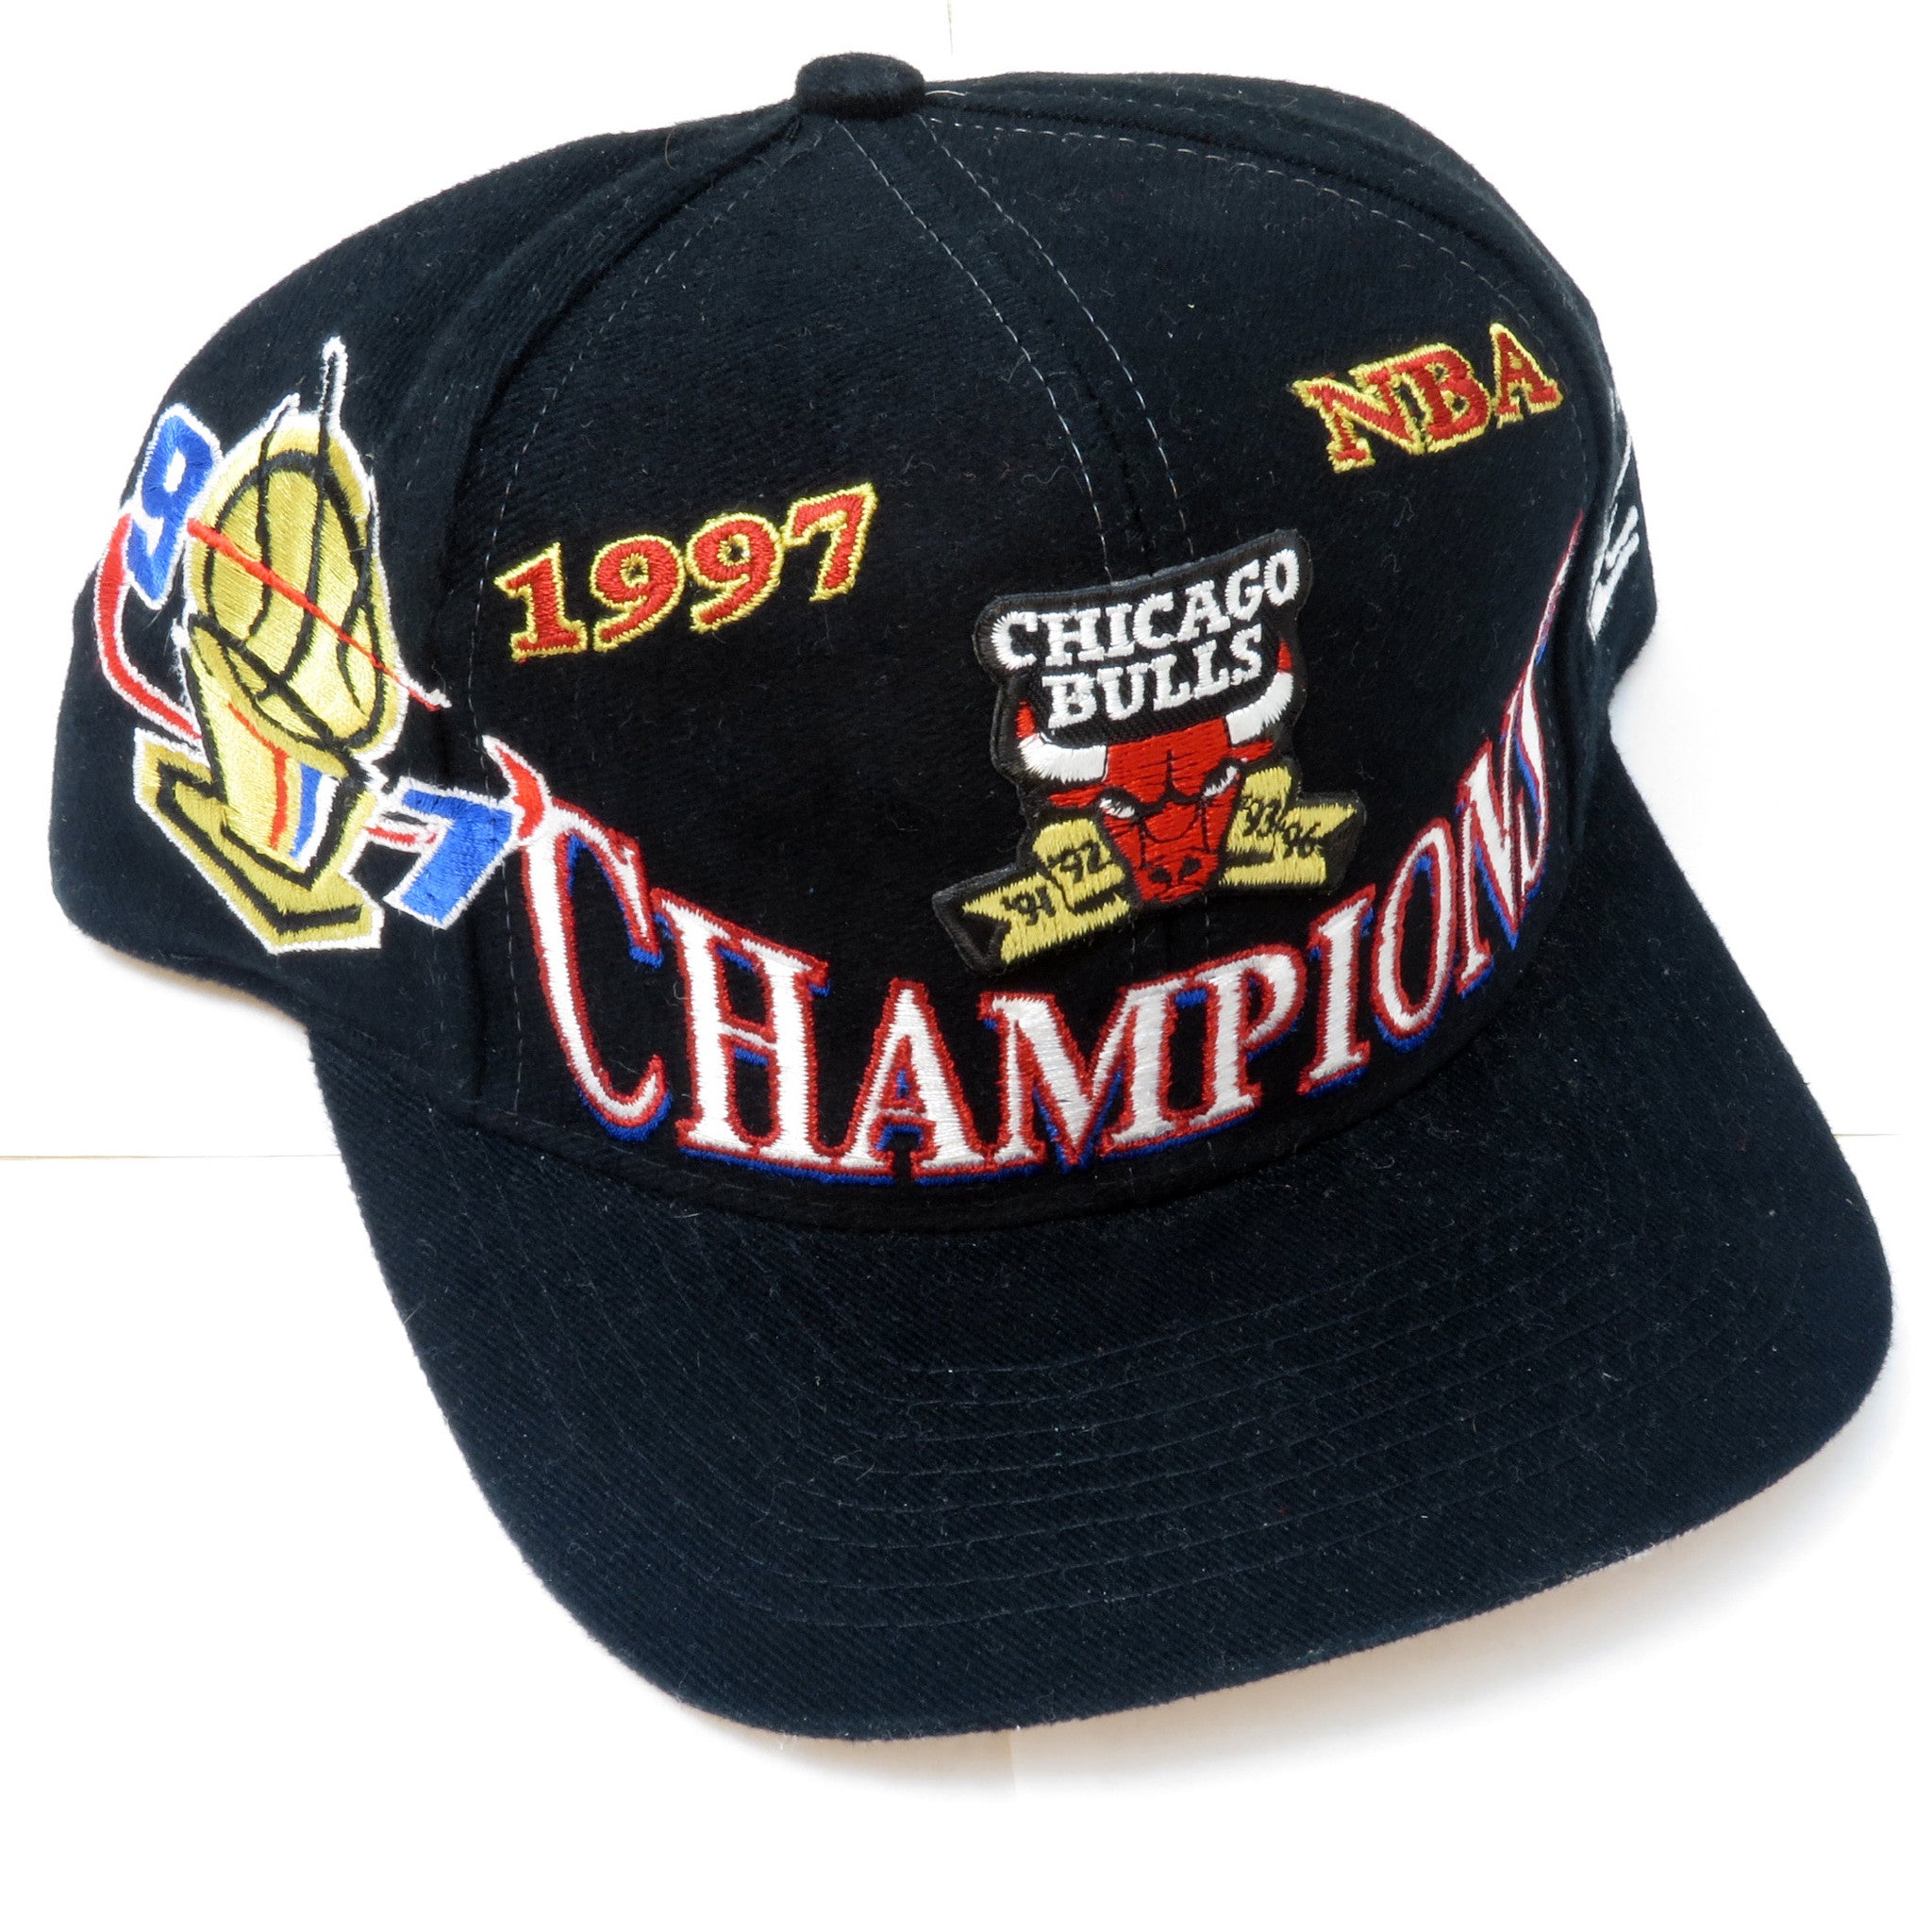 1997 chicago bulls championship hat